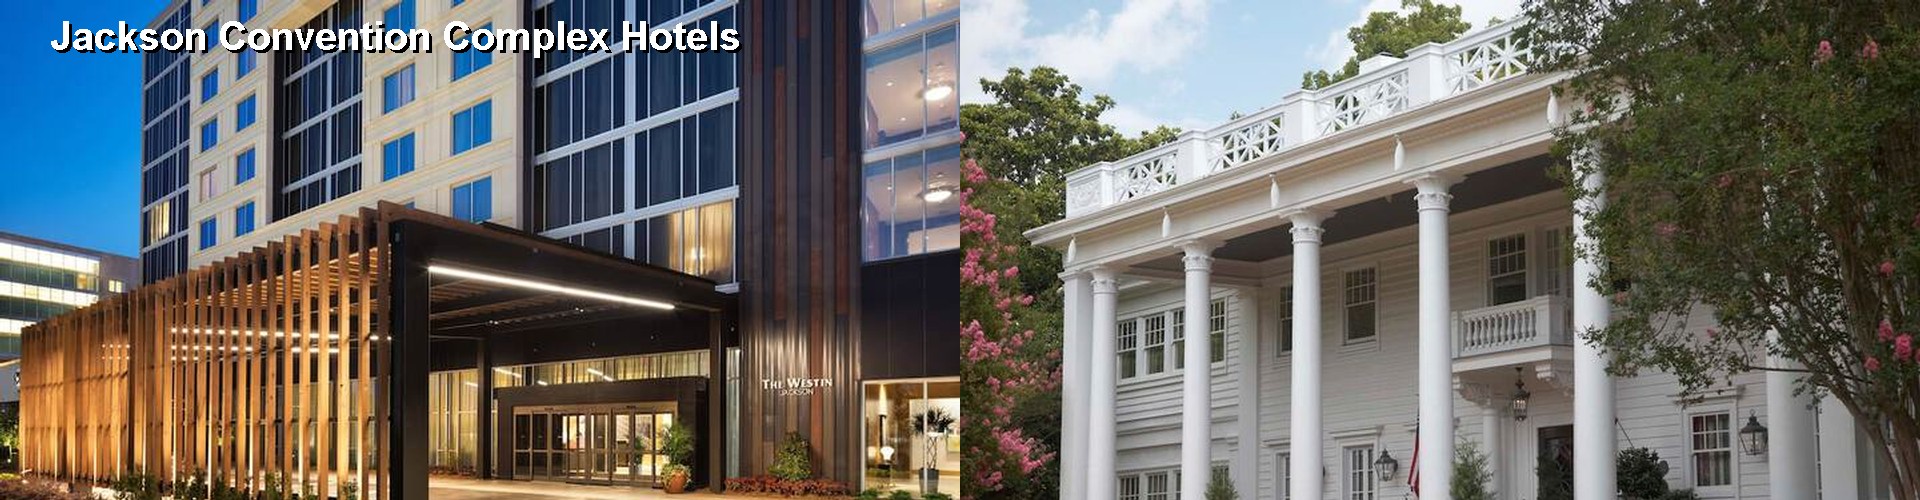 3 Best Hotels near Jackson Convention Complex